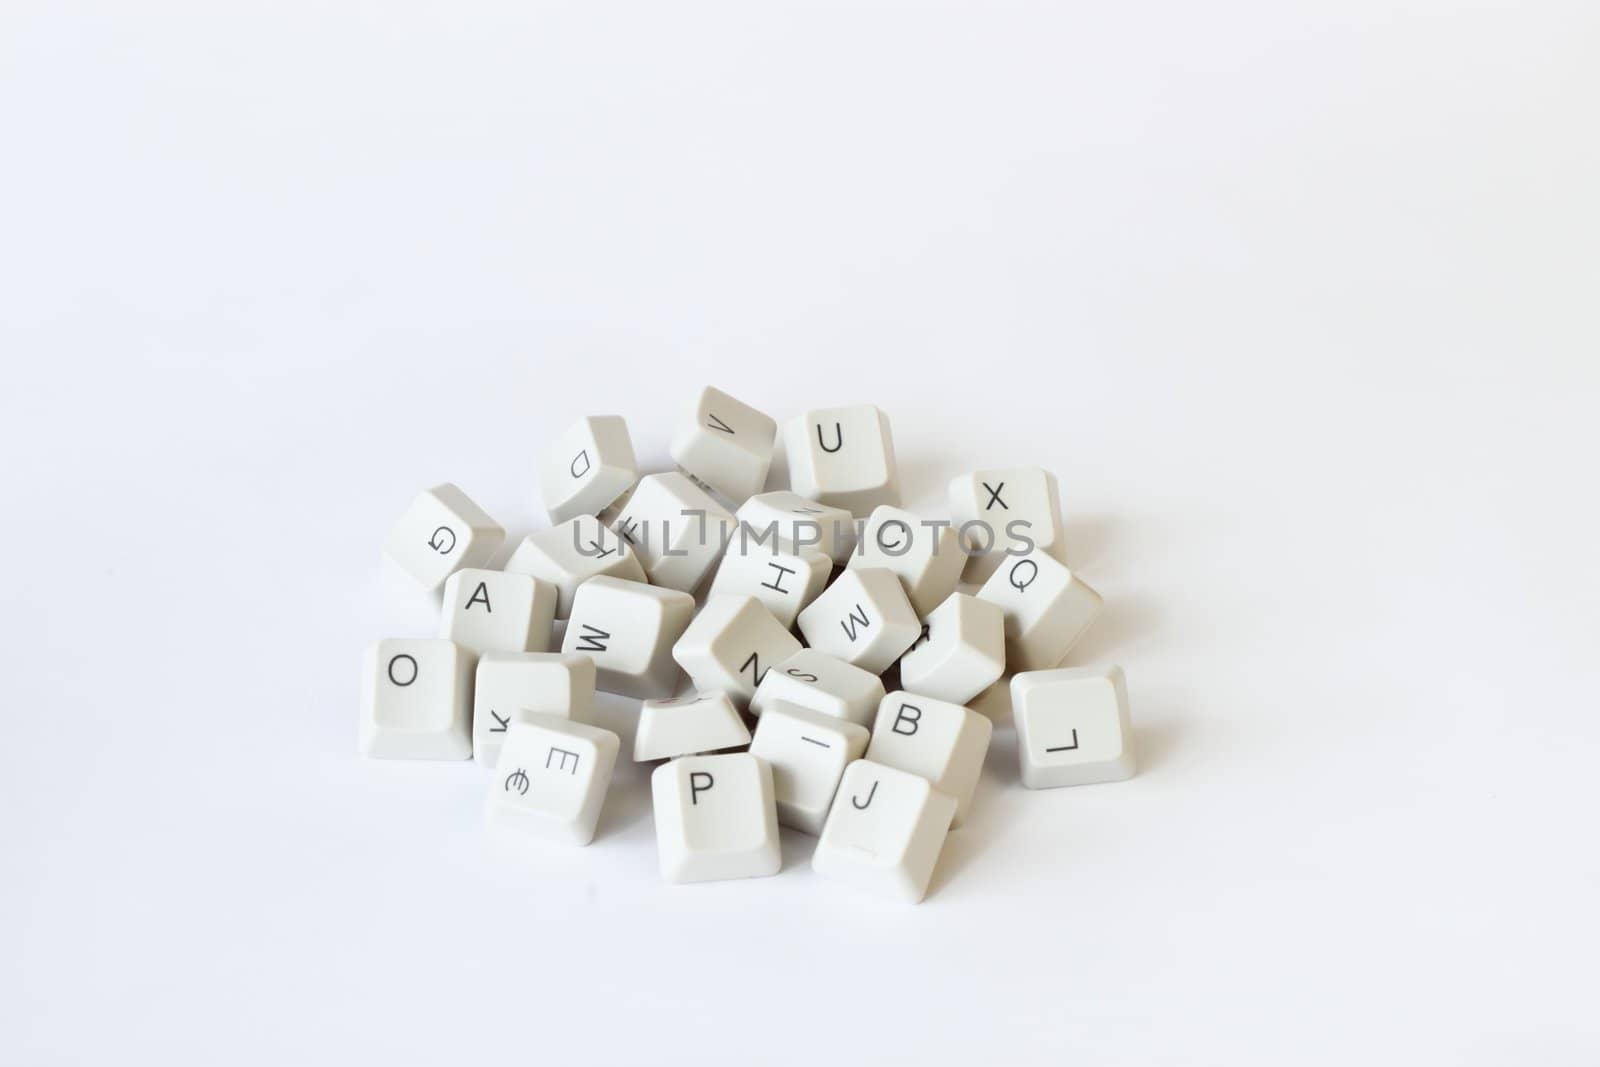 scattered keyboard keys on white background